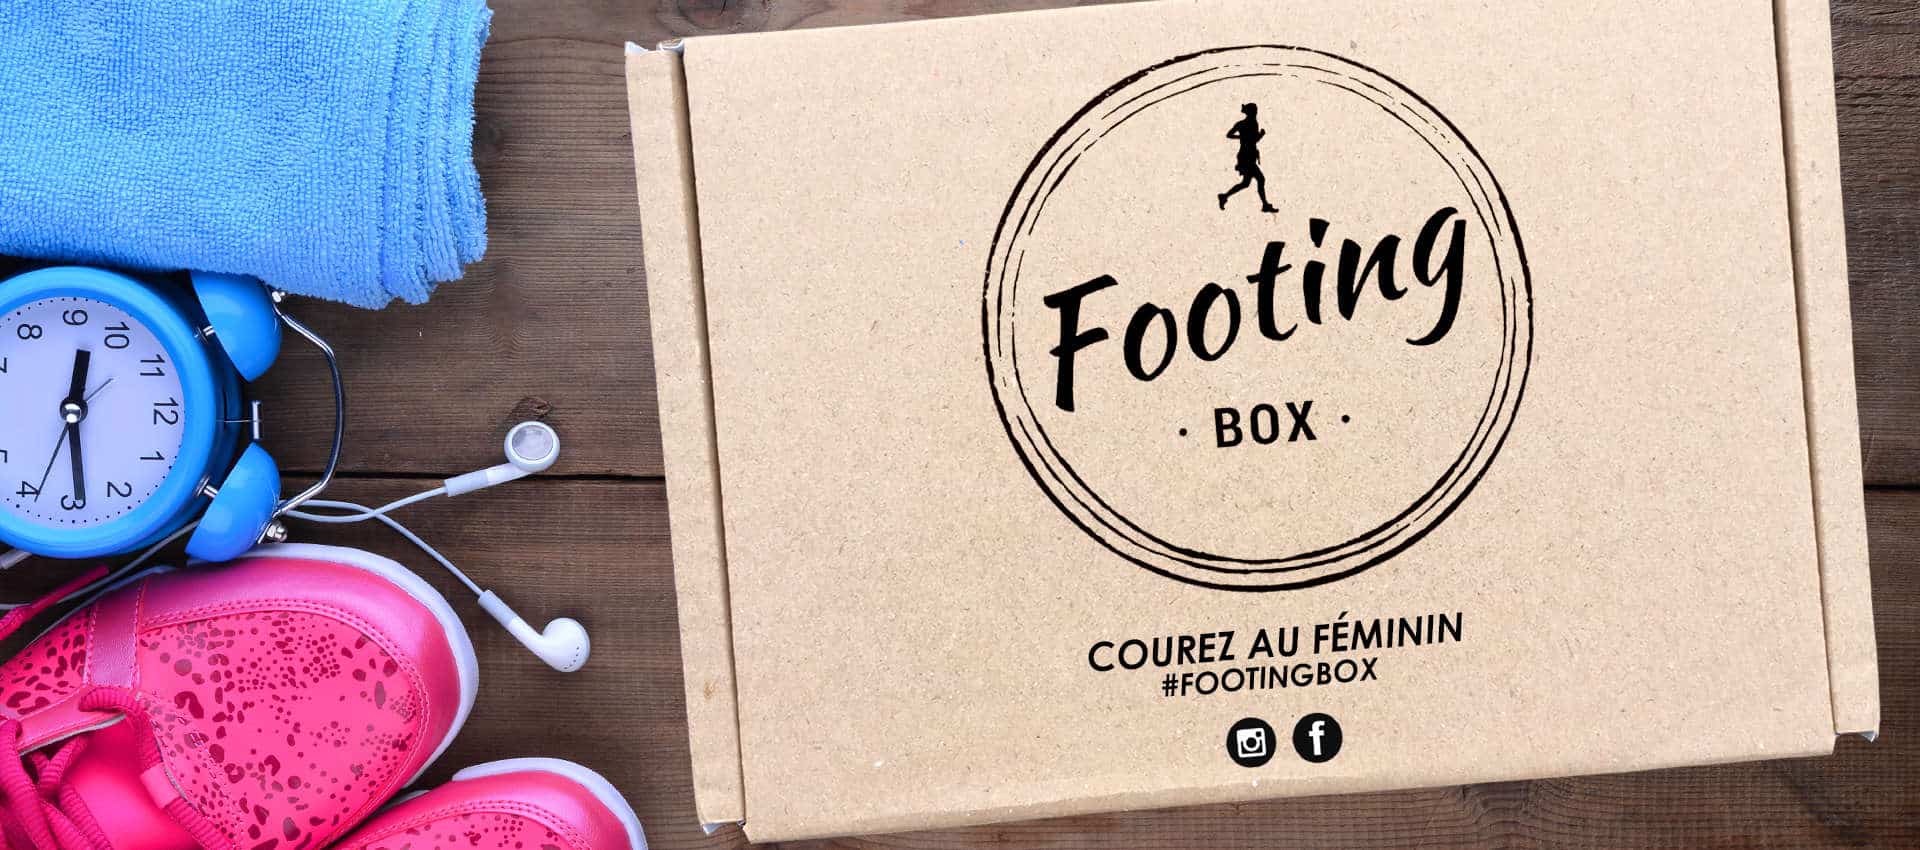 FootingBox